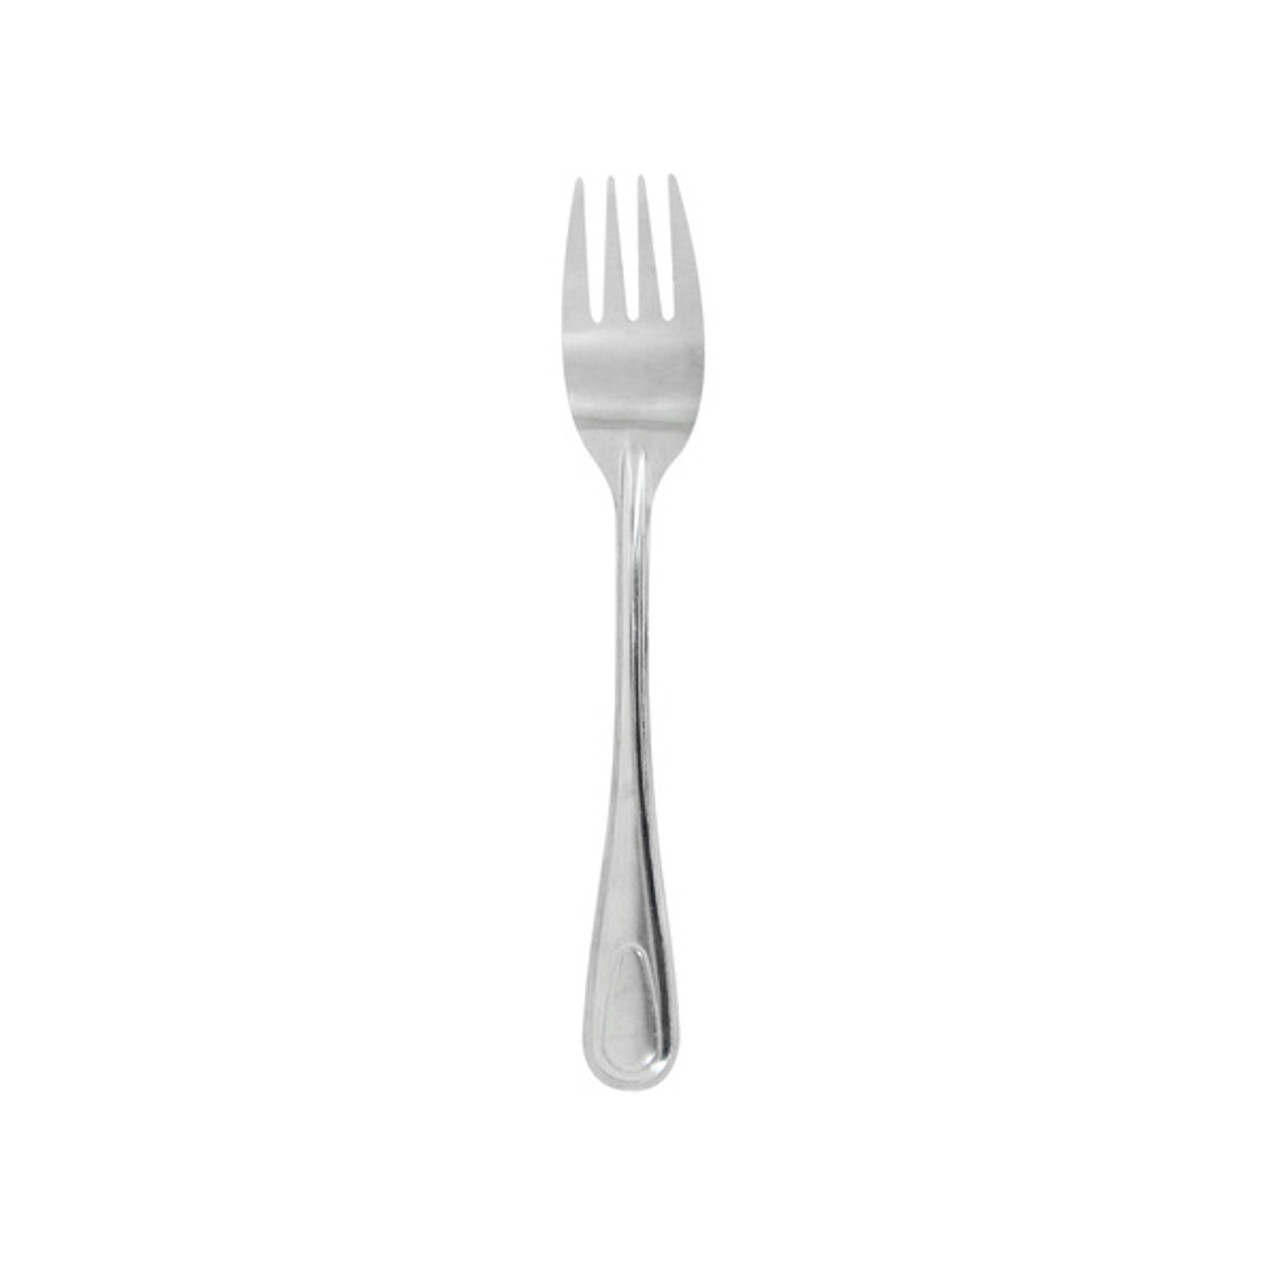 Stainless steel fork 6.34in - Dishwasher safe